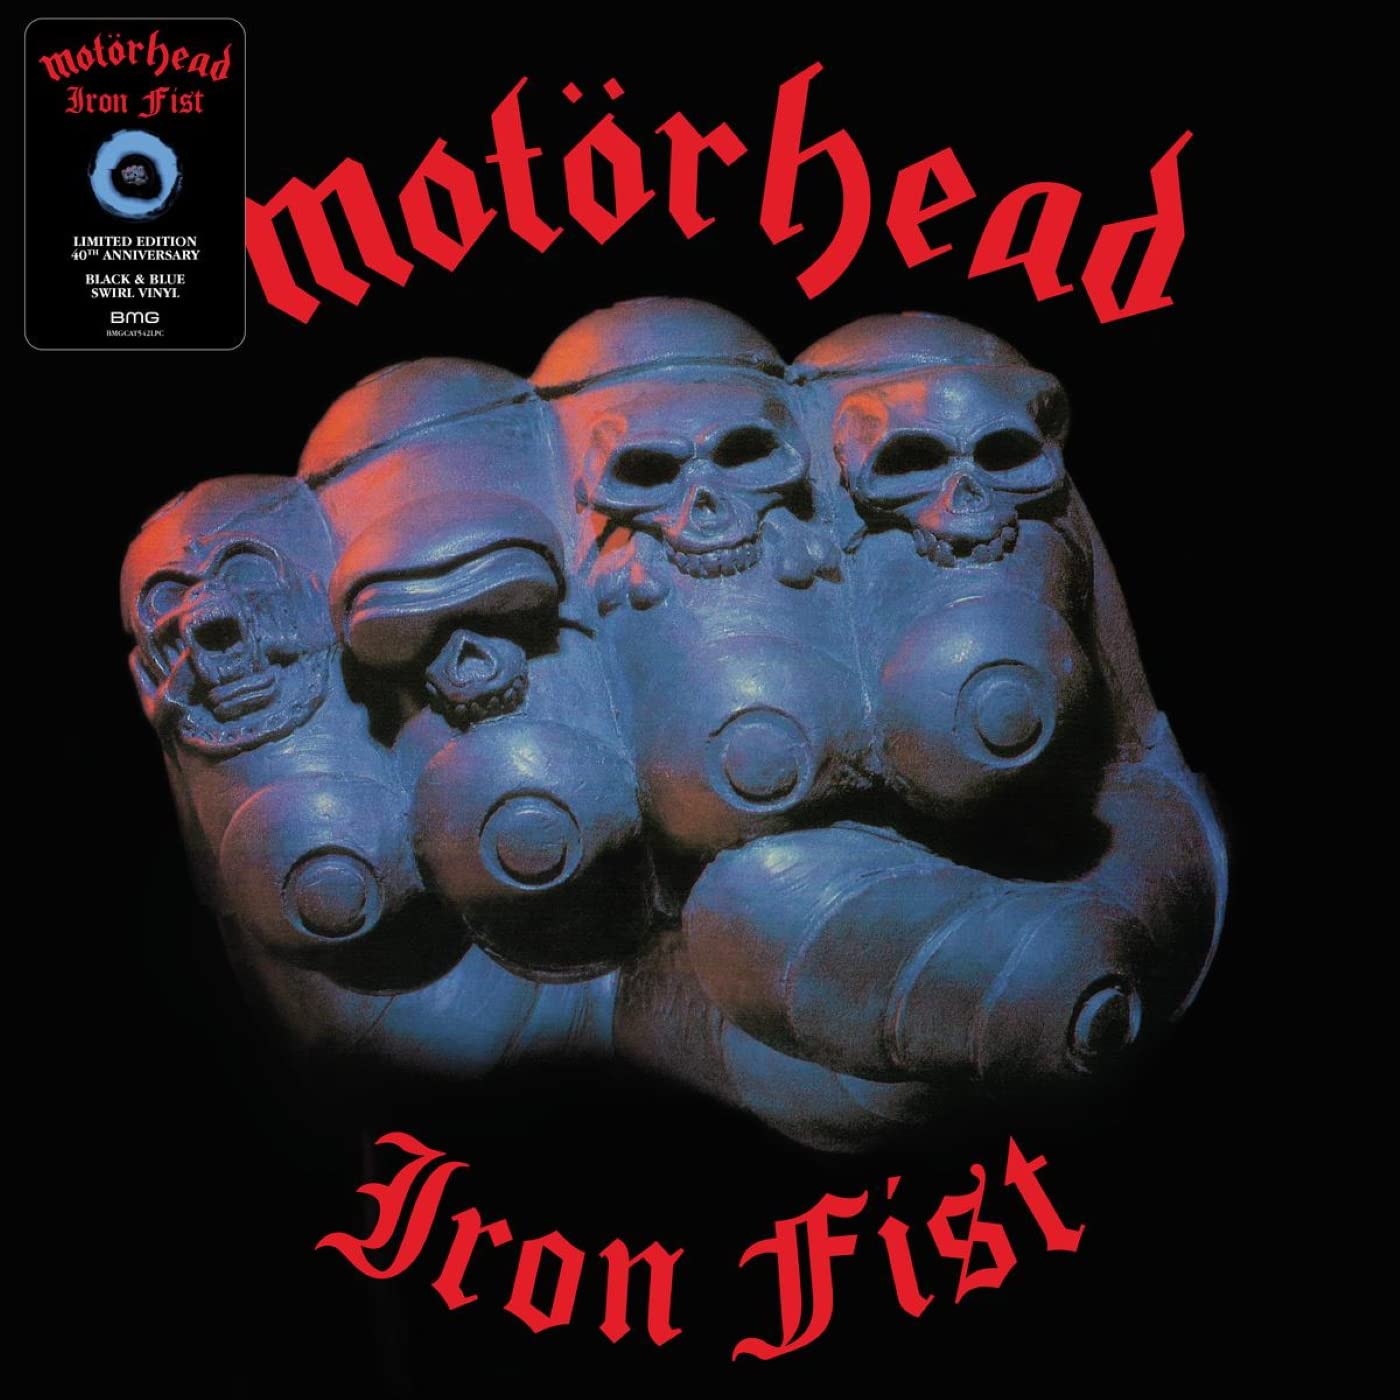 Motorhead Iron Fist 40th Anniversary Limited Blue/Black Vinyl LP